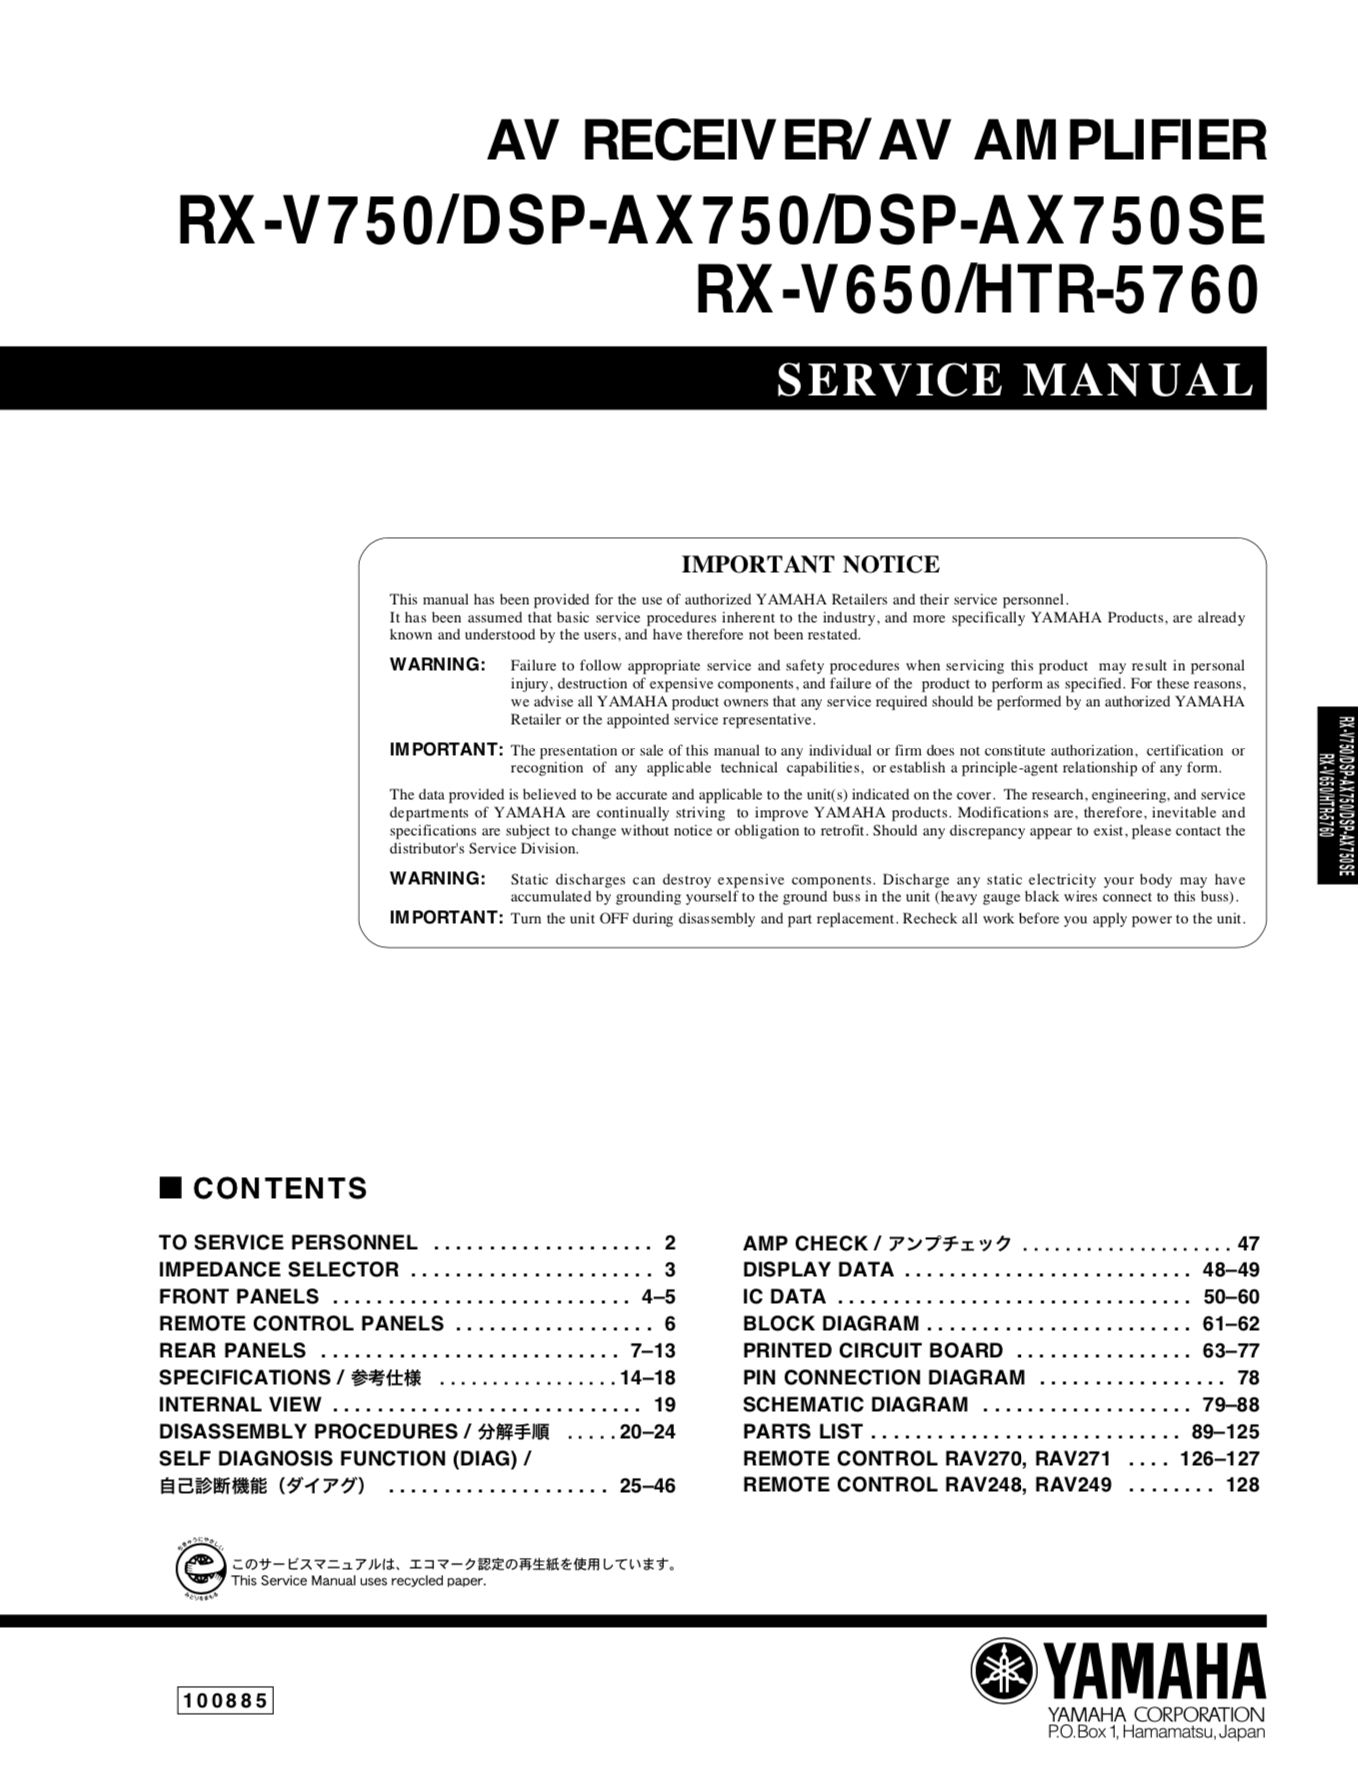 YAMAHA RX-V650 RX-V750 Service Manual Complete